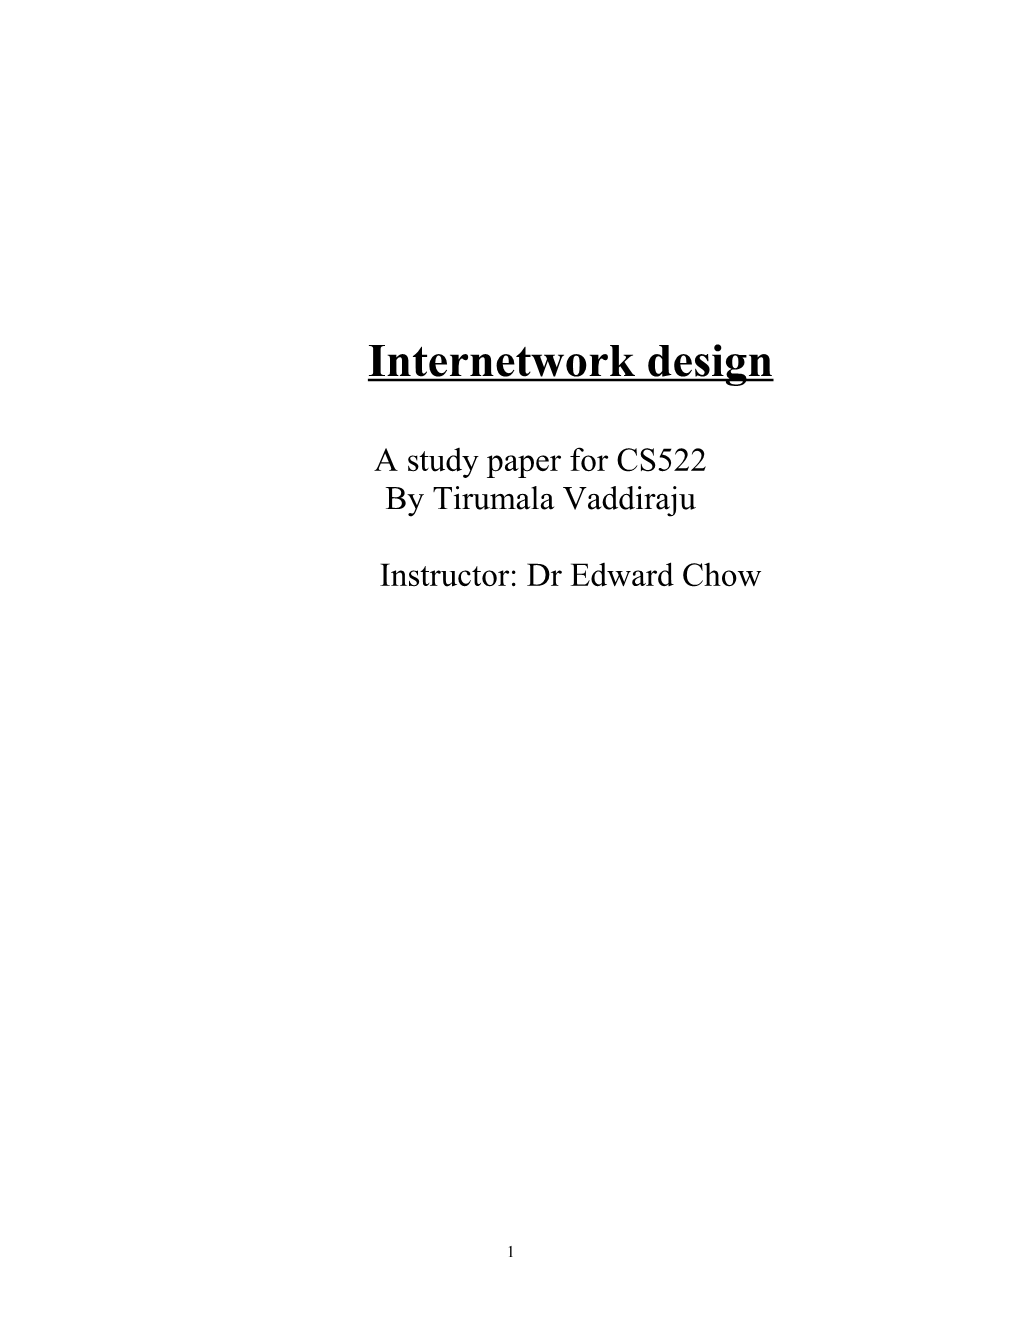 Internetwork Design